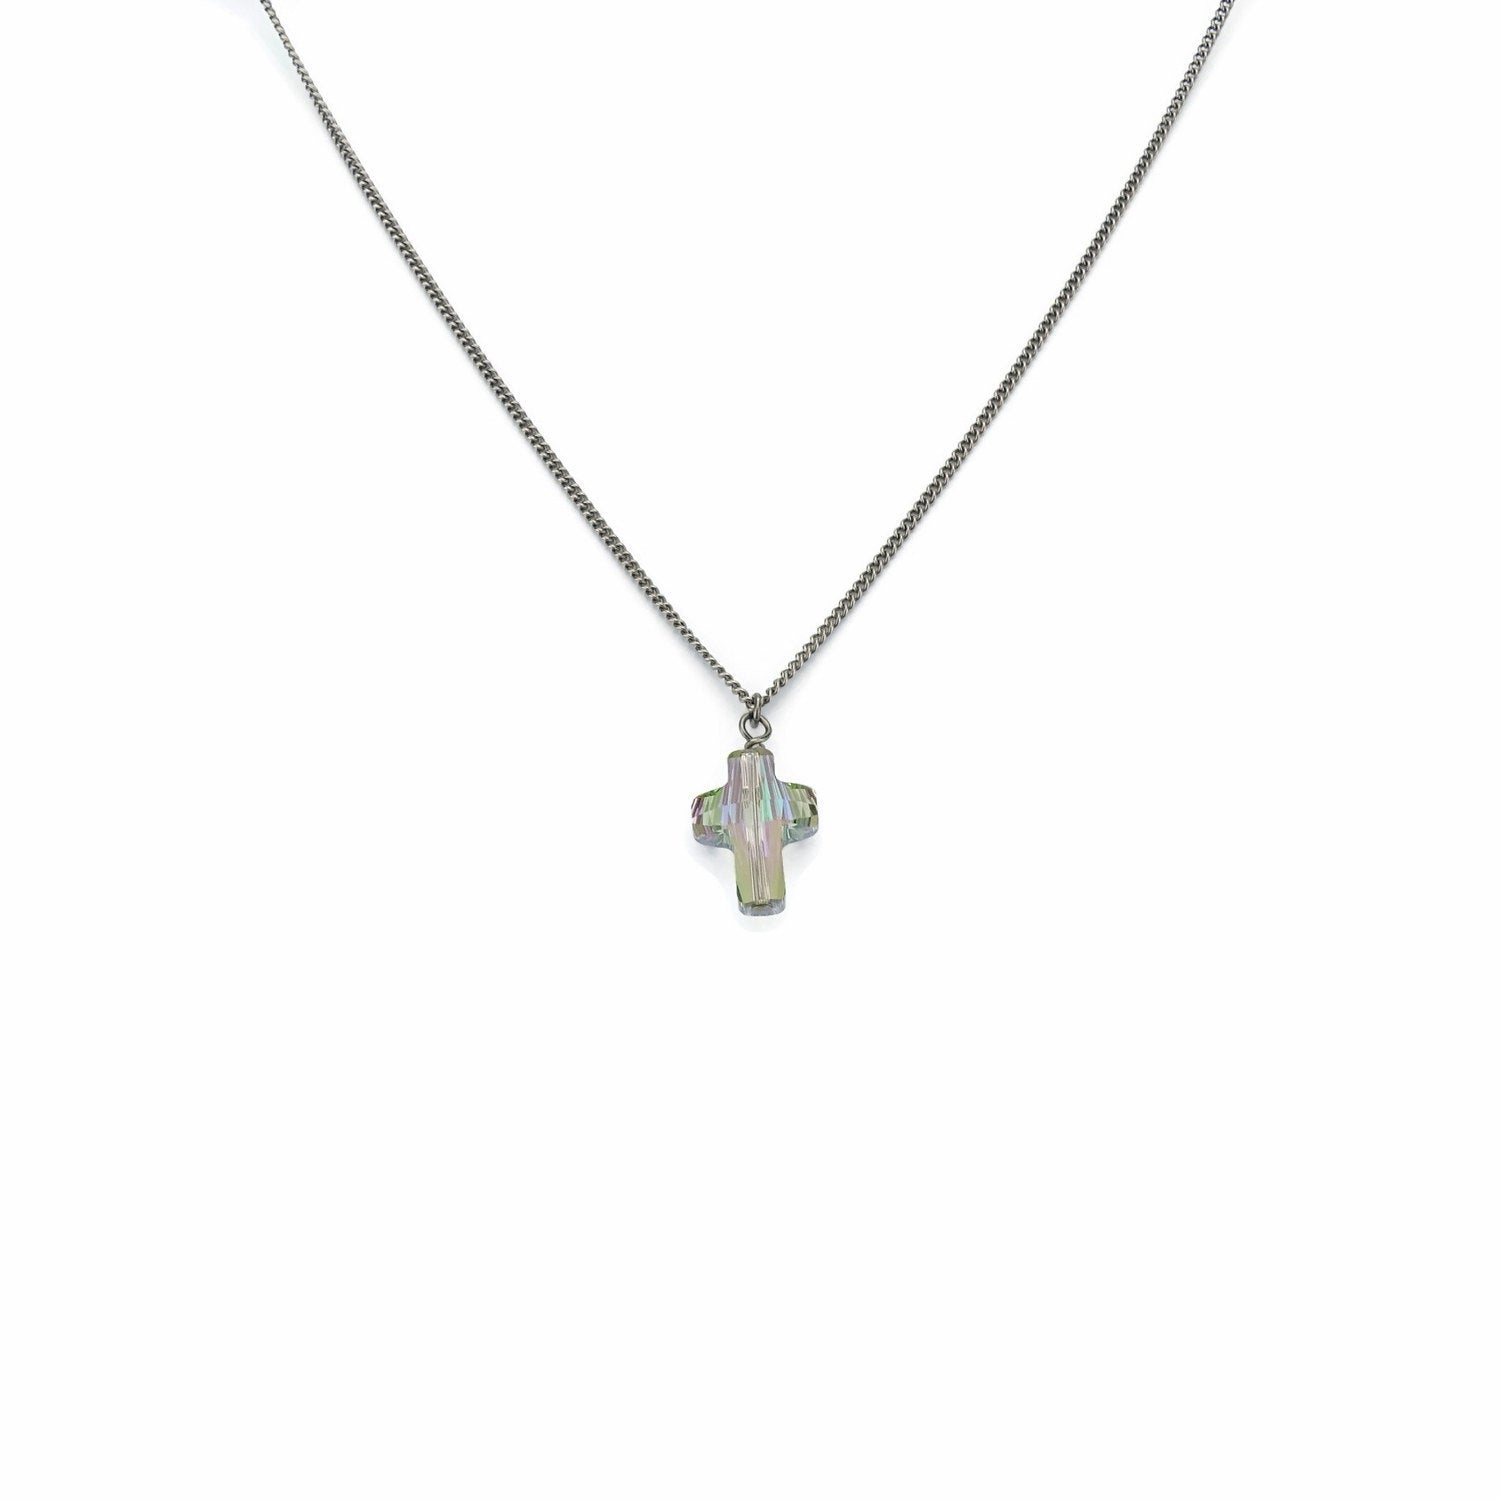 Titanium Cross Necklace Paradise Shine Swarovski Crystal, Swarovski Cross Pure Titanium Necklace For Sensitive Skin, Blue Purple Green